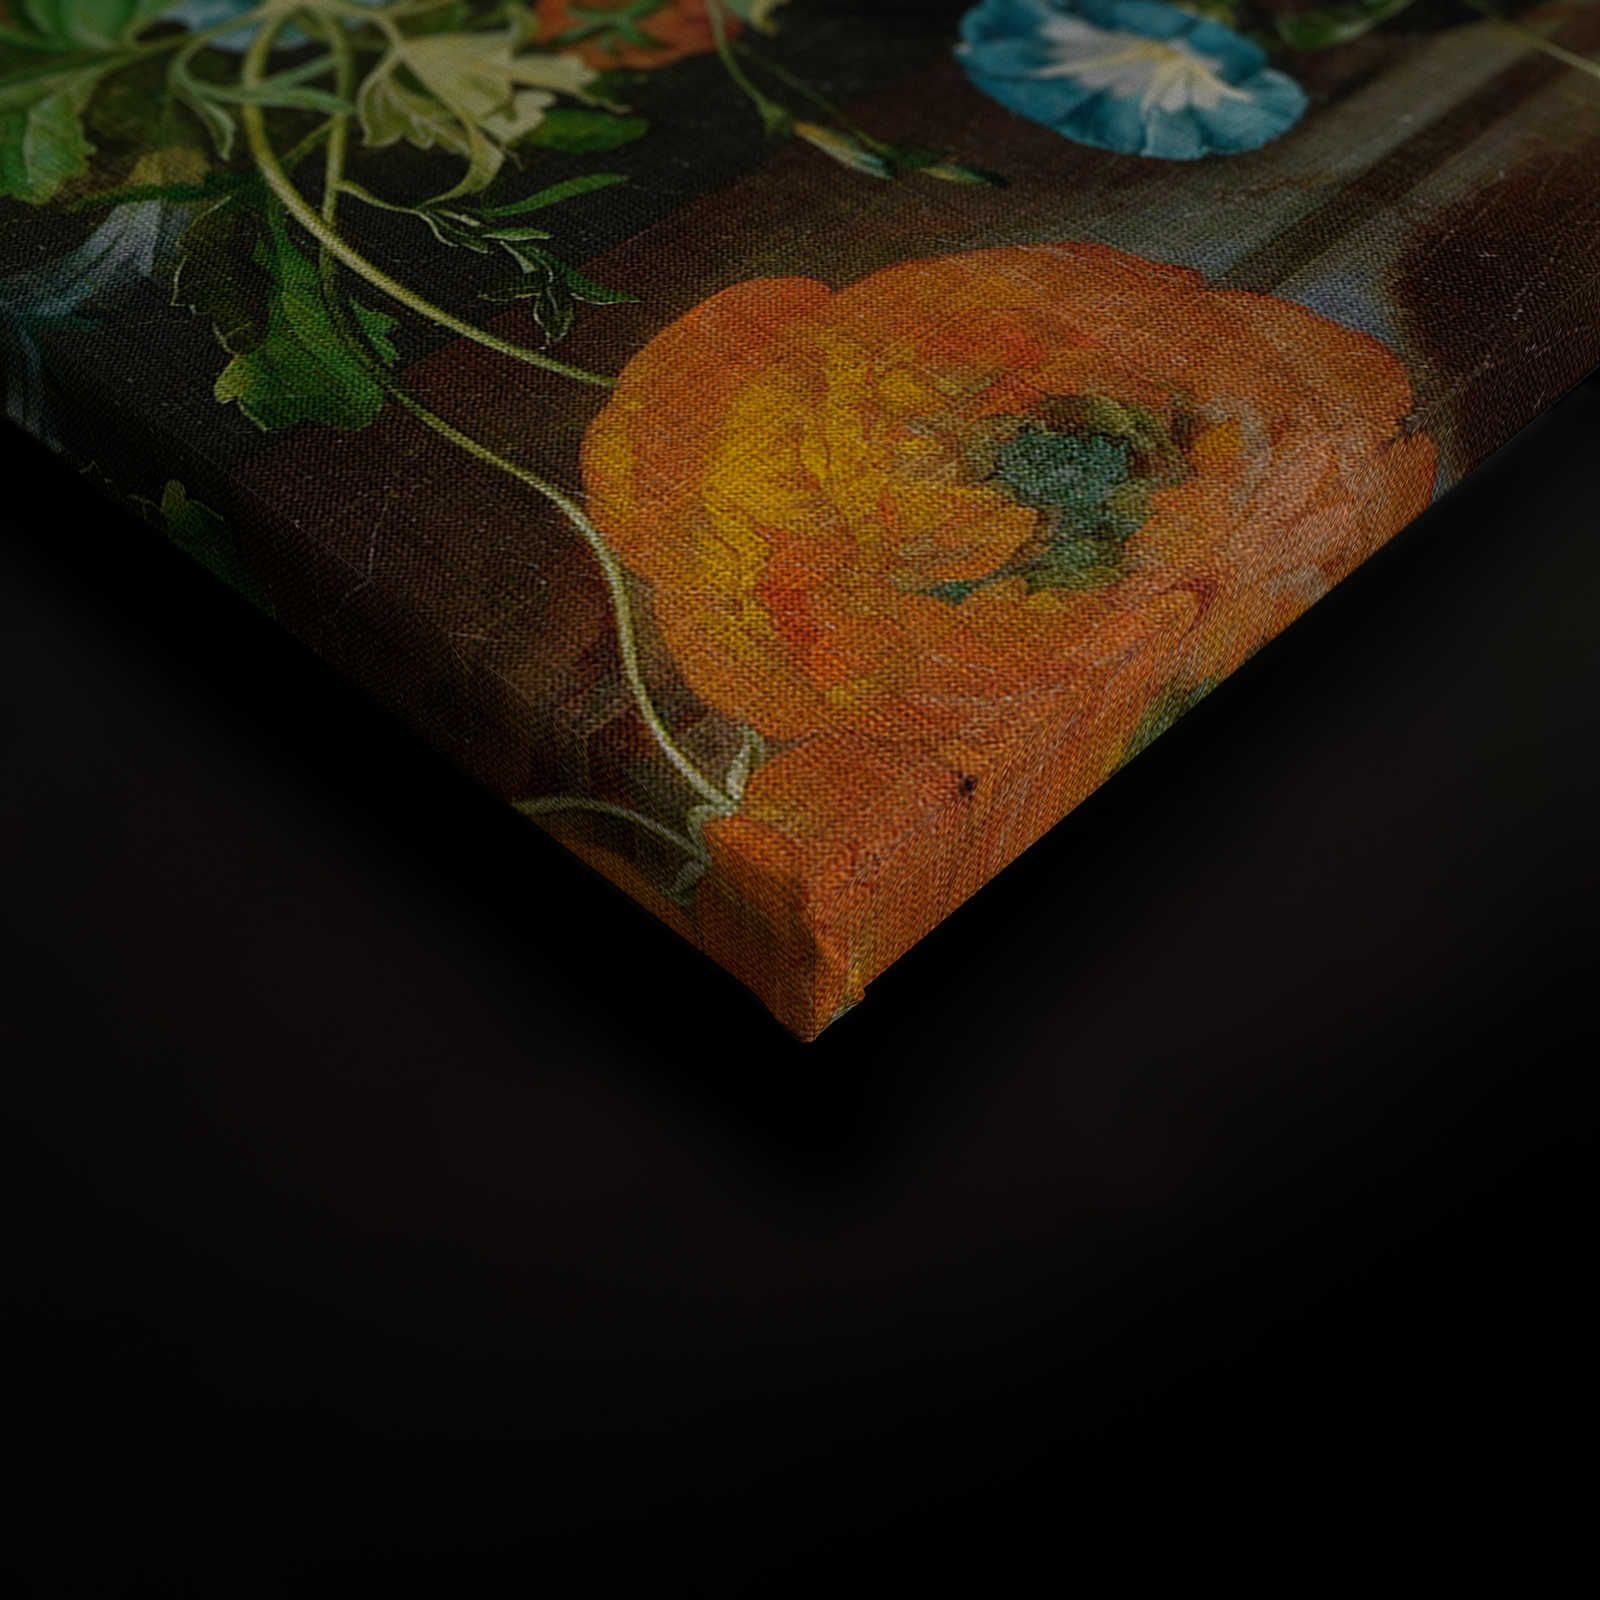             Studio d'artista 2 - Quadro su tela Fiori Bouquet Pittura d'arte - 0,60 m x 0,90 m
        